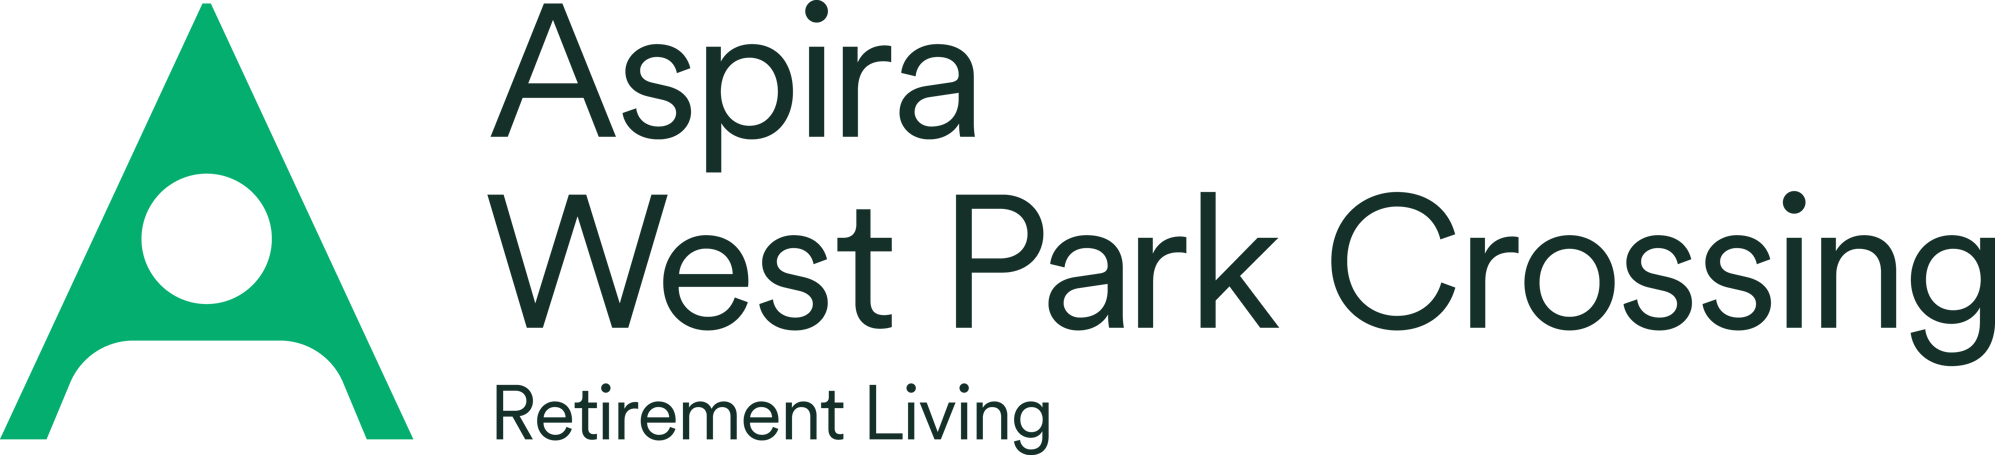 Aspira-logo-West_Park_Crossing